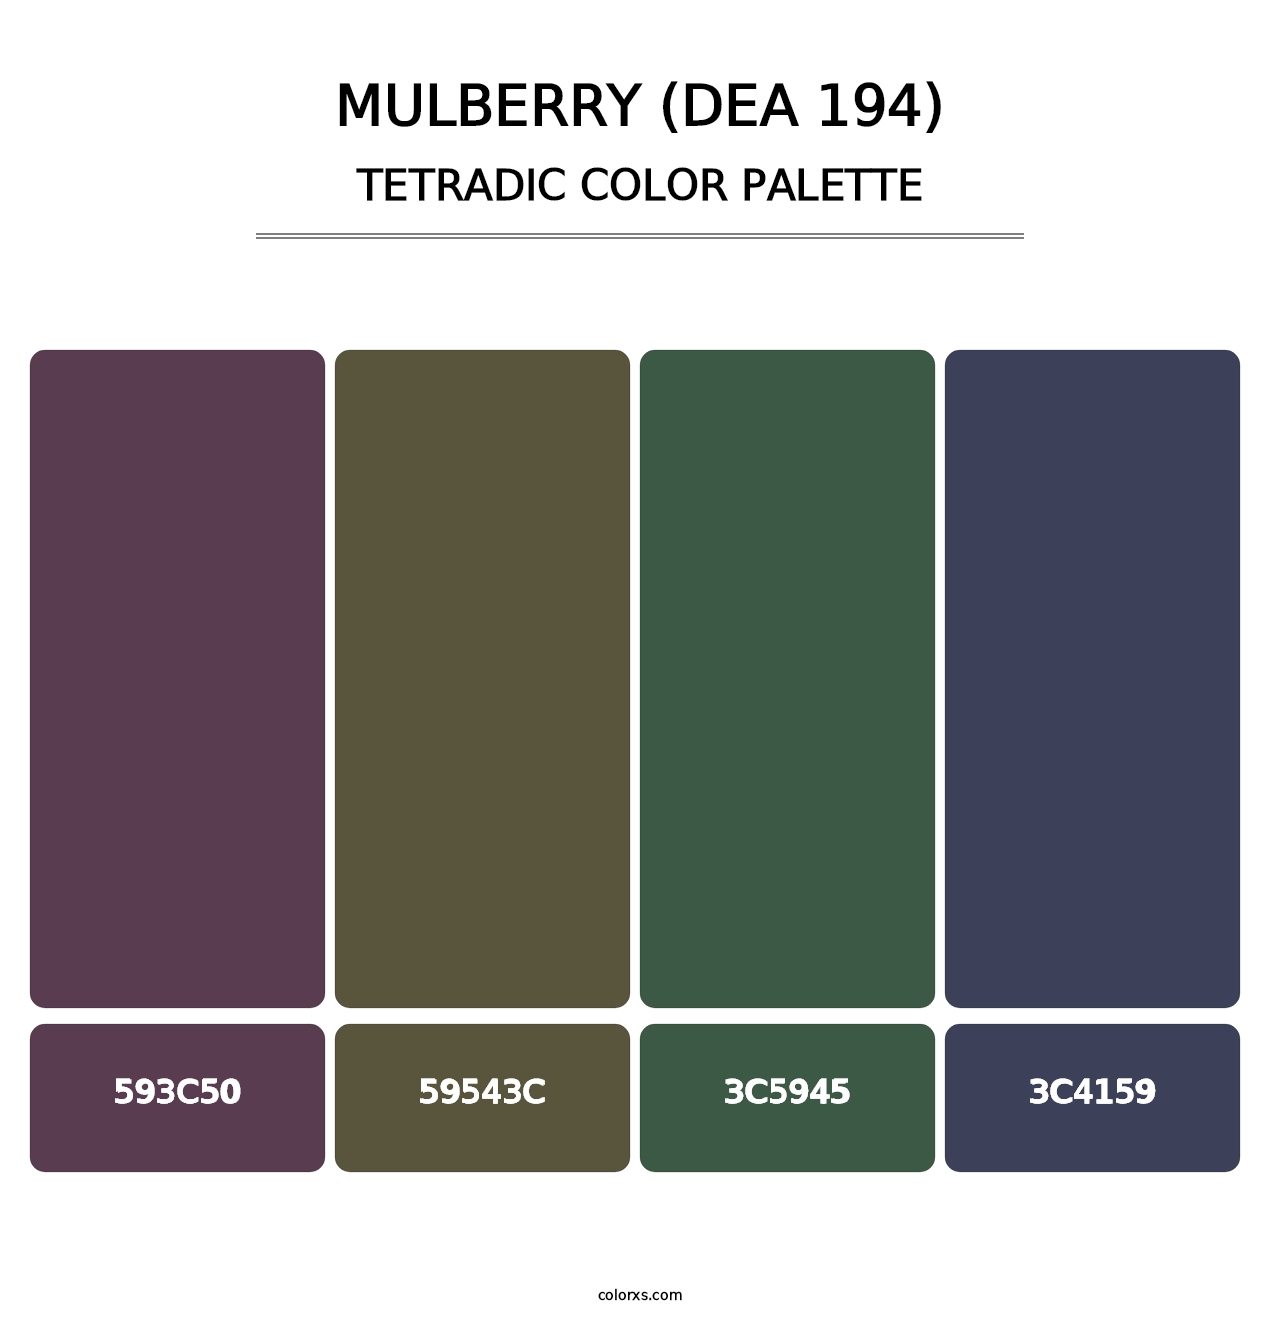 Mulberry (DEA 194) - Tetradic Color Palette